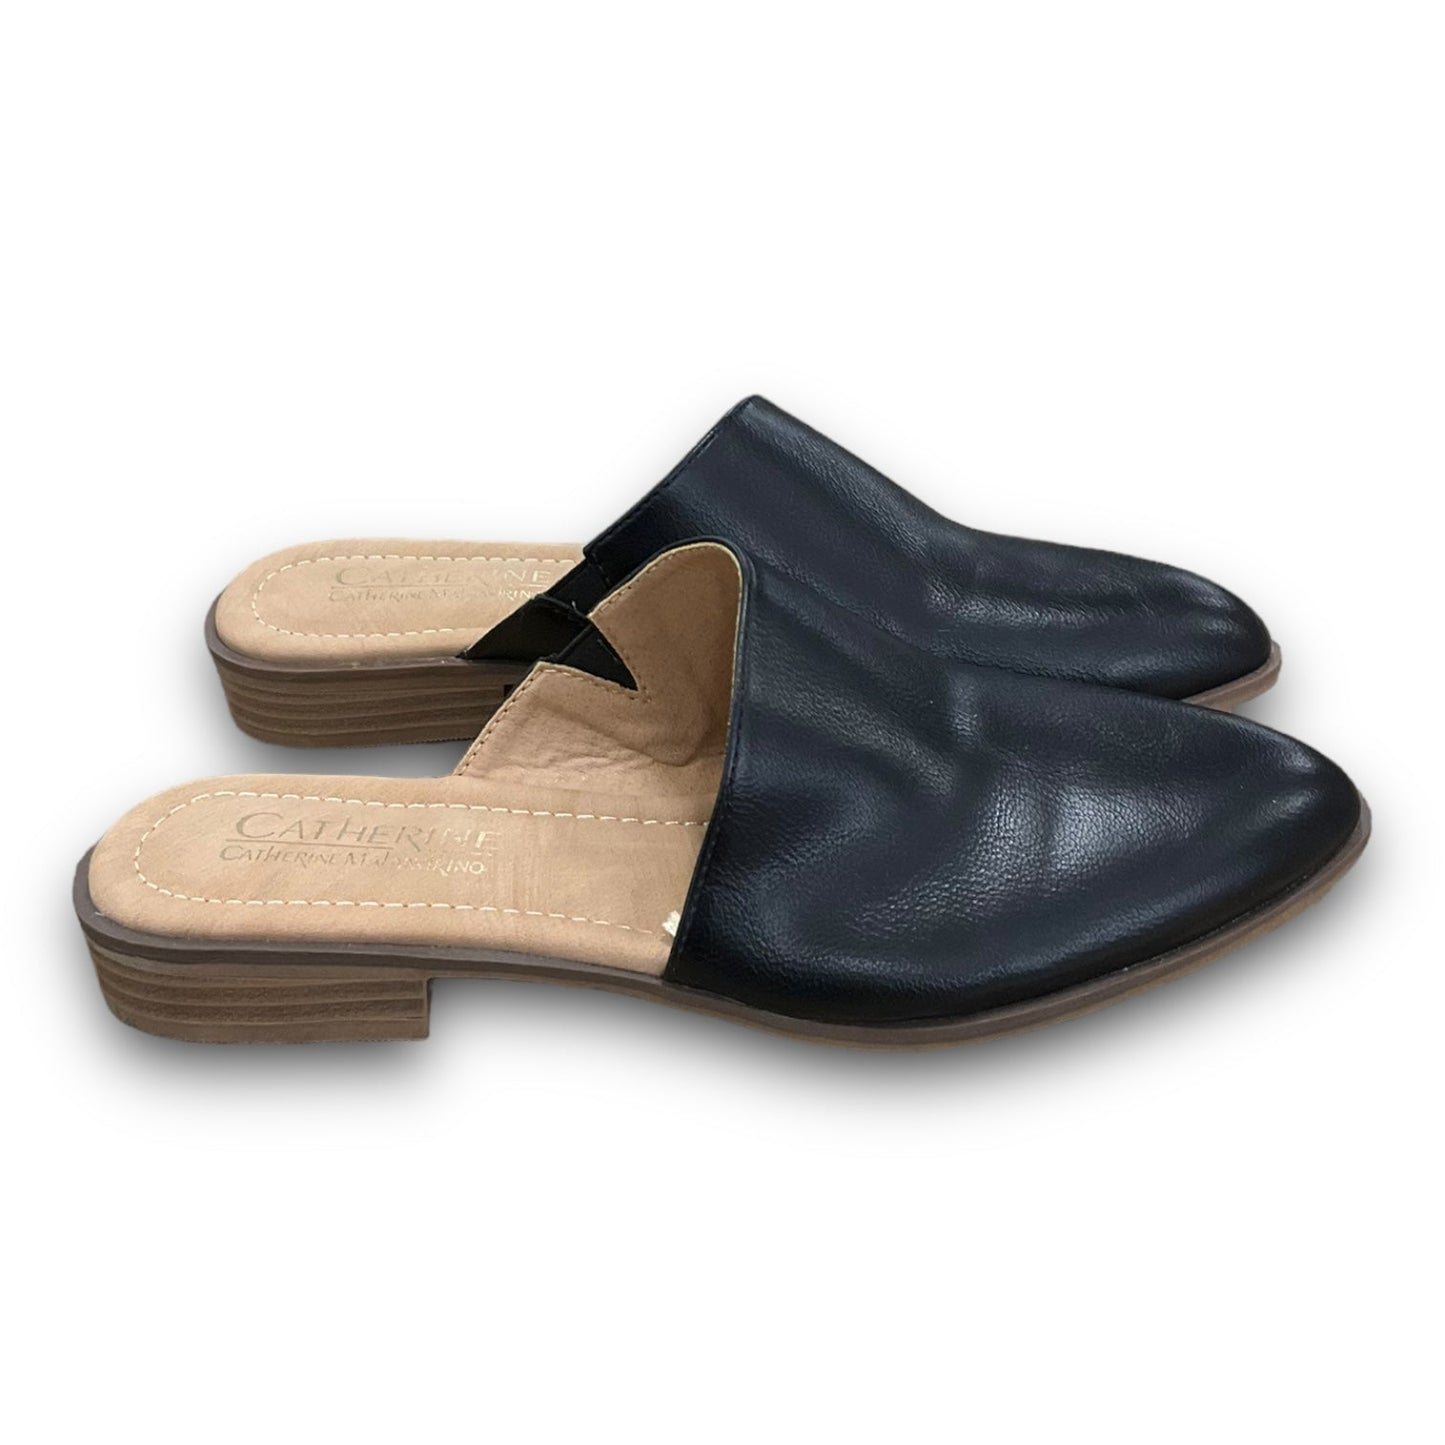 Black Shoes Flats Catherine Malandrino, Size 7.5